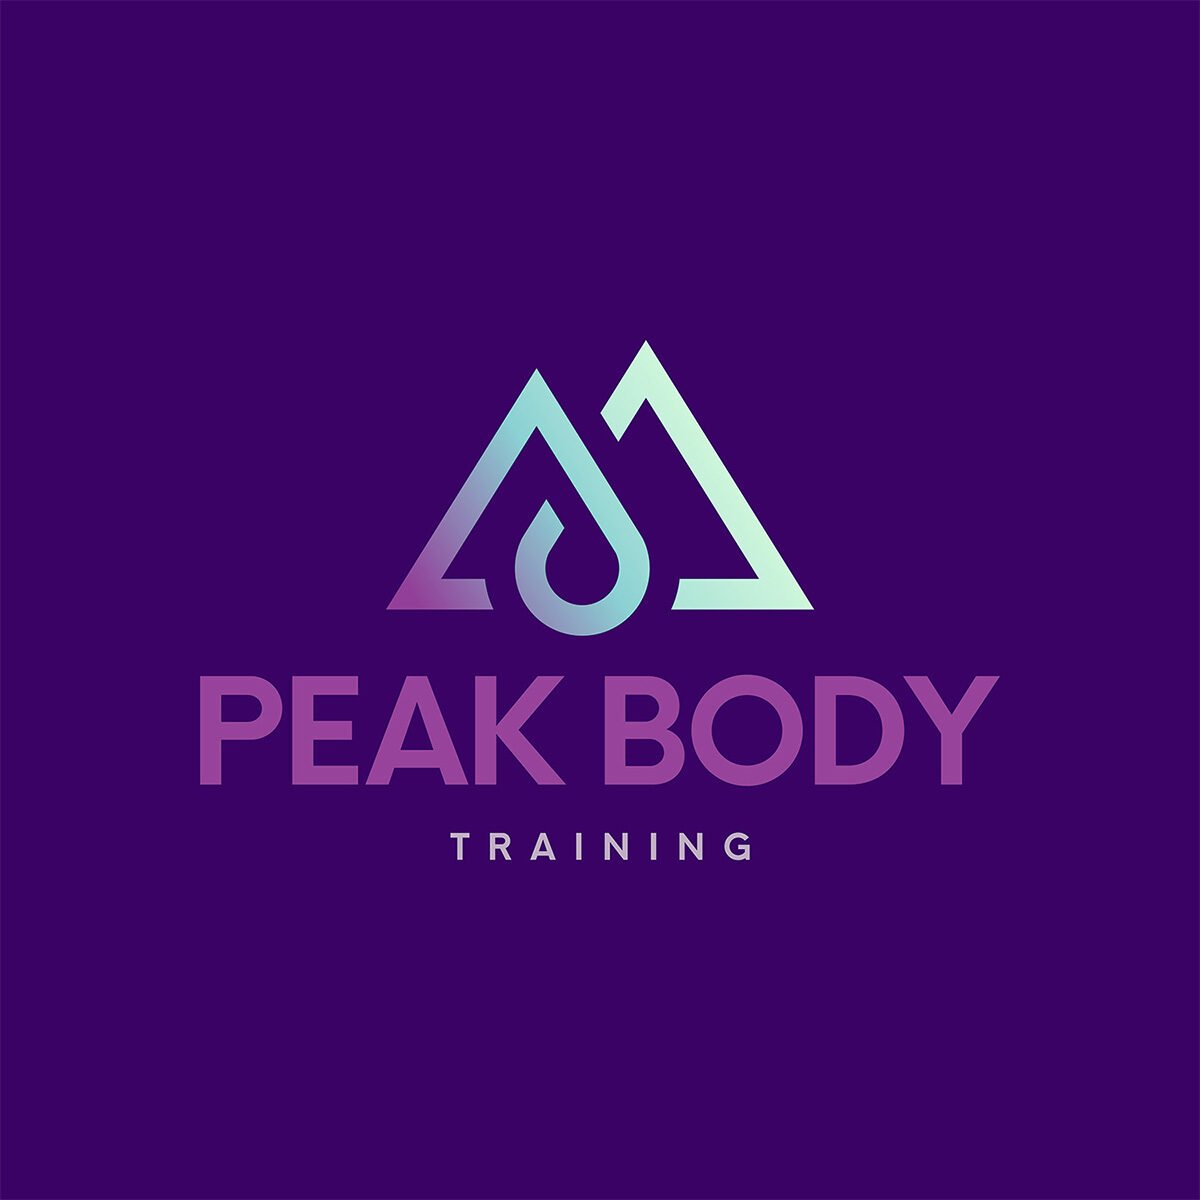 lindsay-mcghee-designs-Peak-Body-Training-invert-1200-2